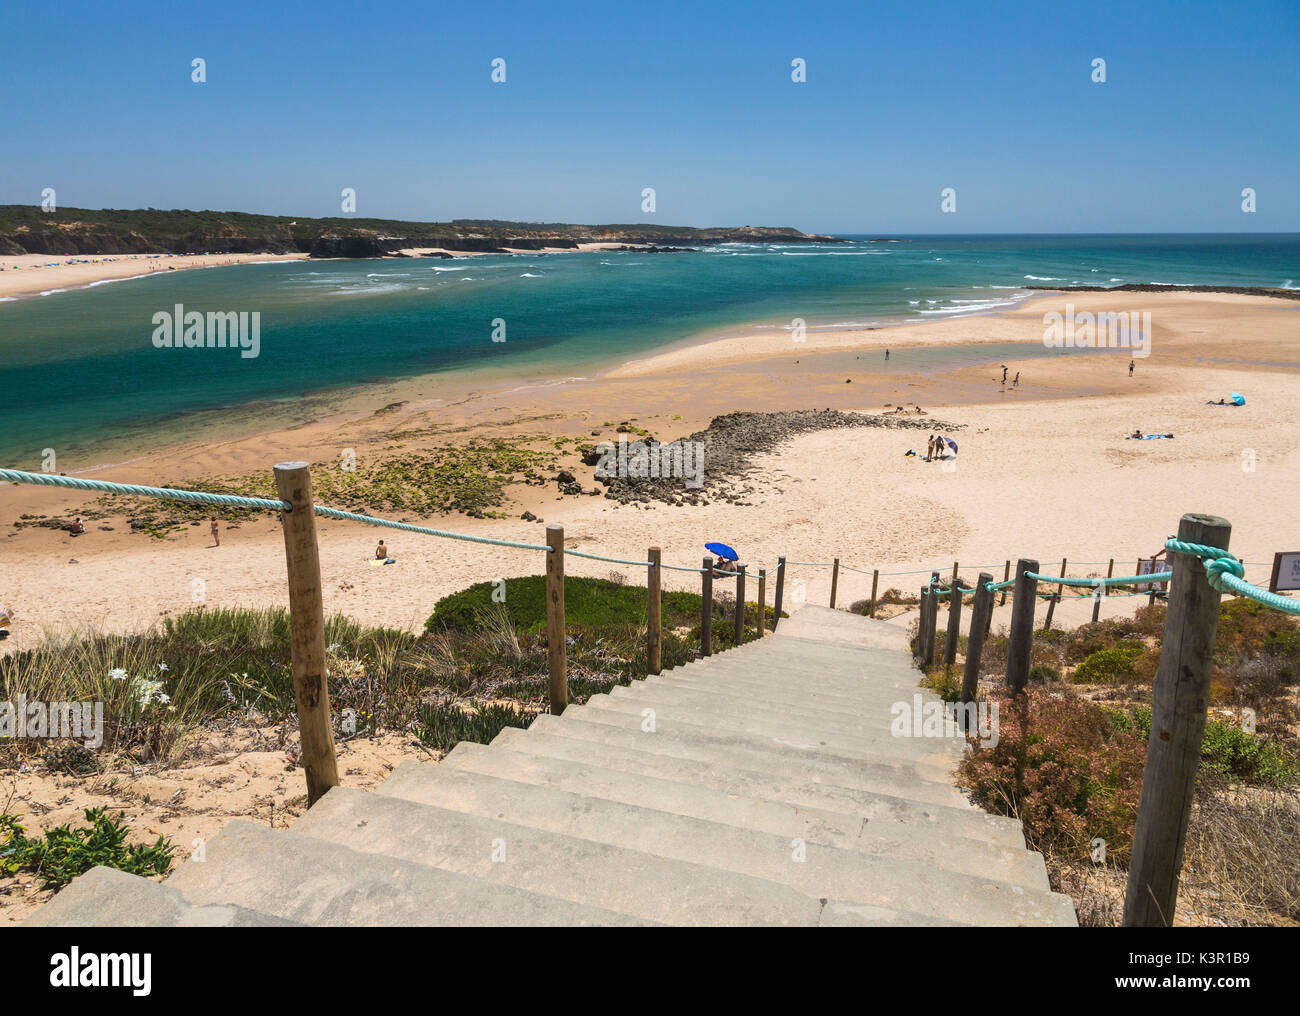 View of the sandy beach of Vila Nova de Milfontes surrounded by the blue ocean Odemira Alentejo region Portugal Europe Stock Photo